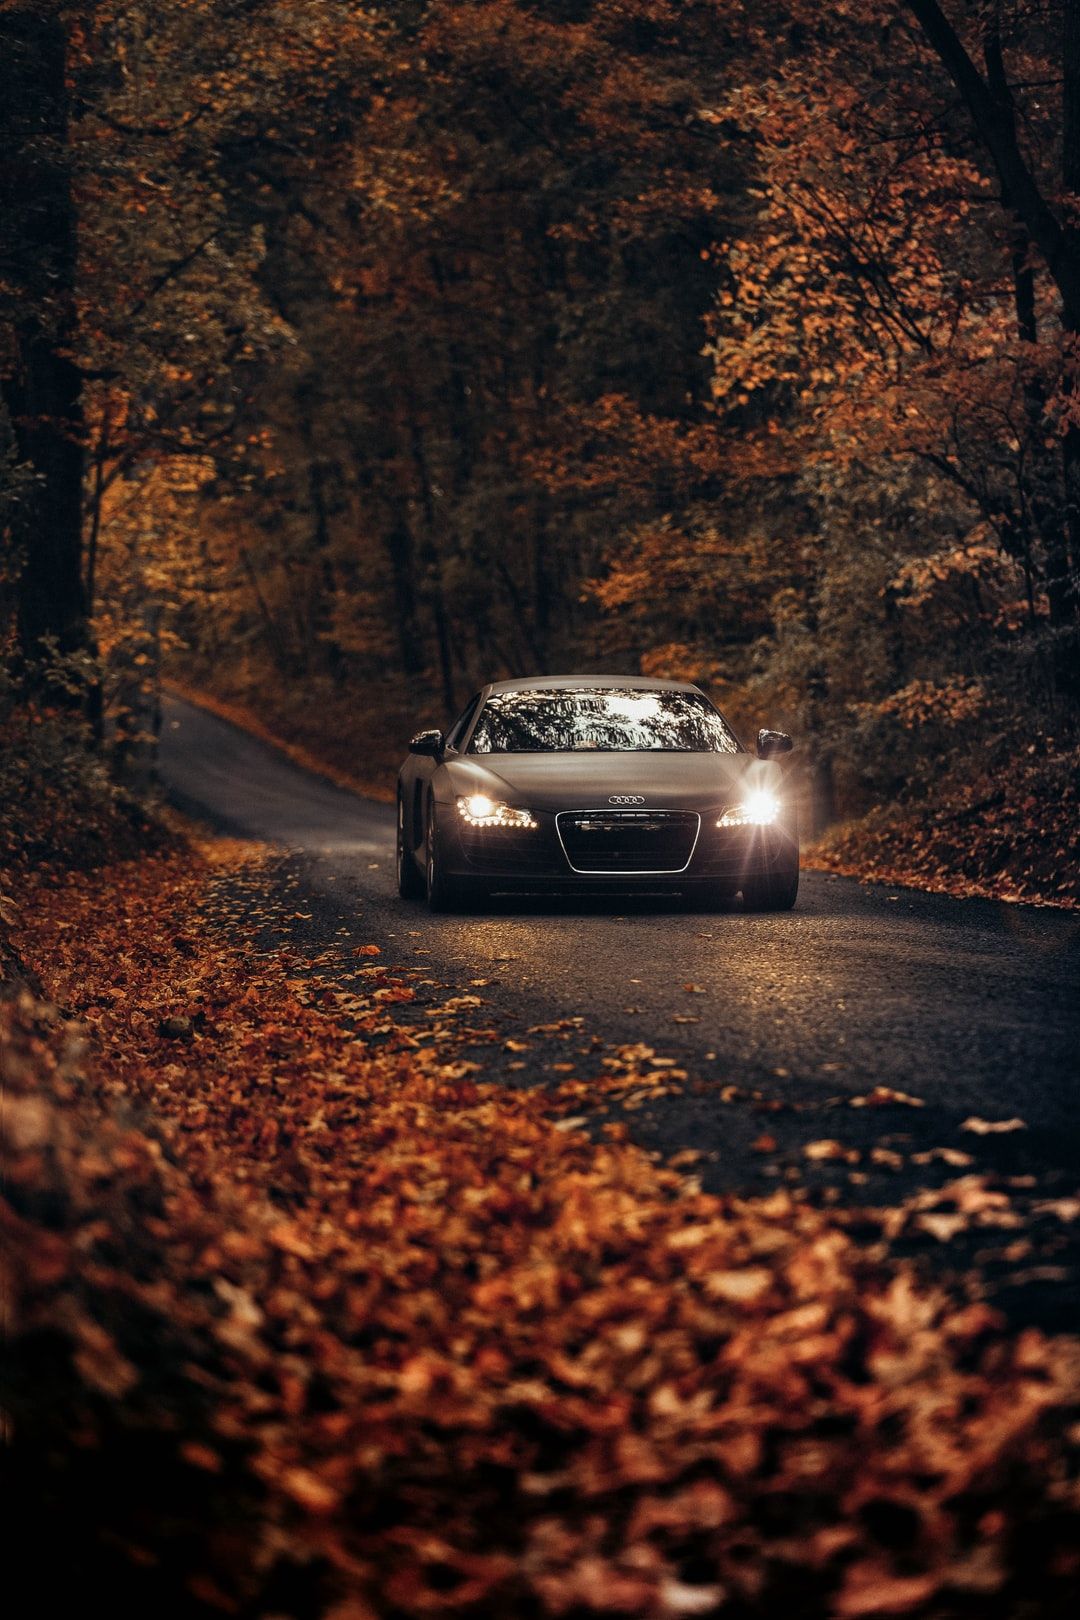 Audi Wallpaper [HD]. Download Free Image